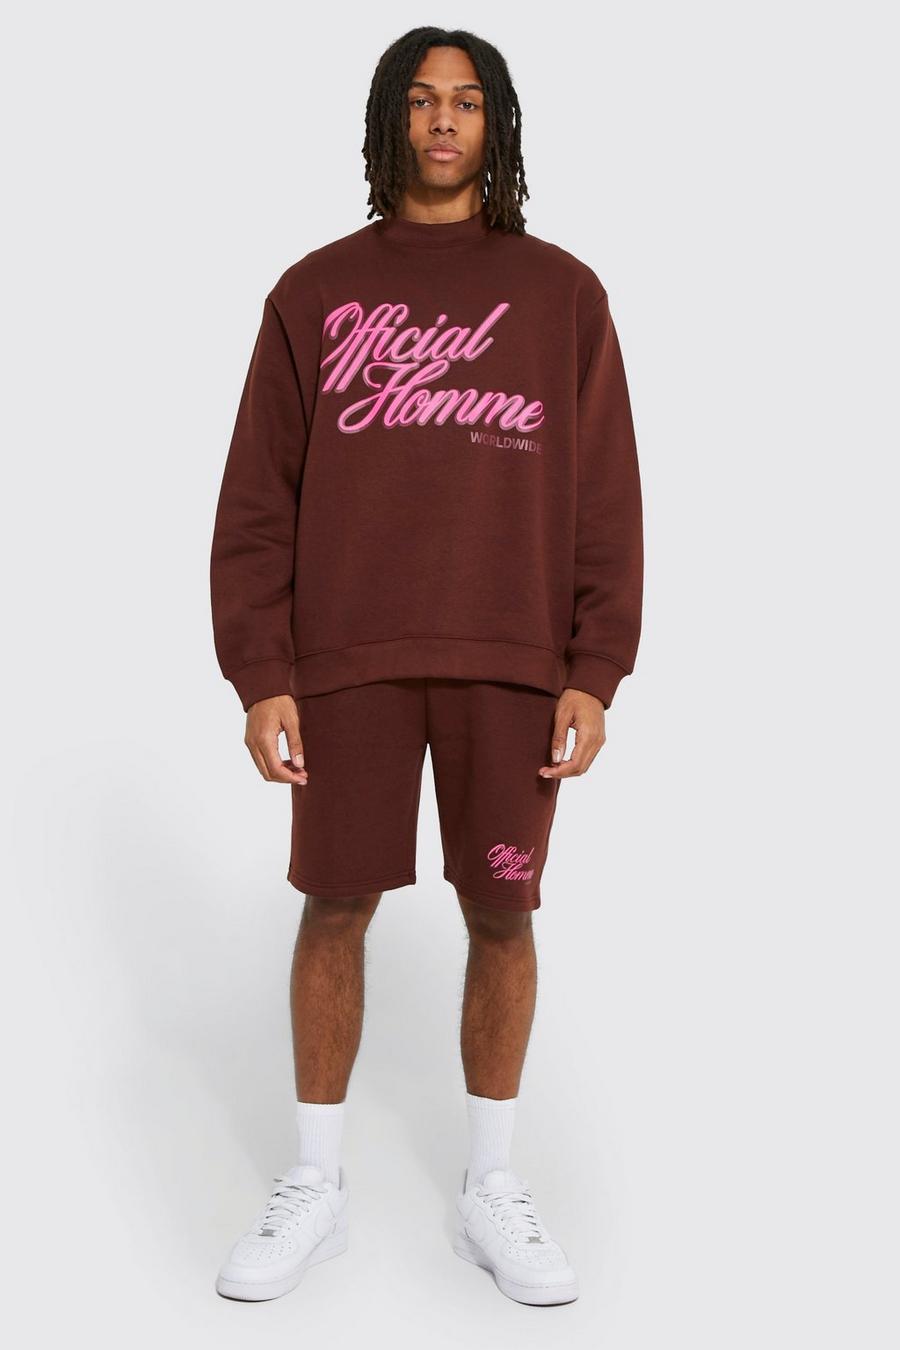 Chocolate brun Homme Oversize sweatshirt och shorts